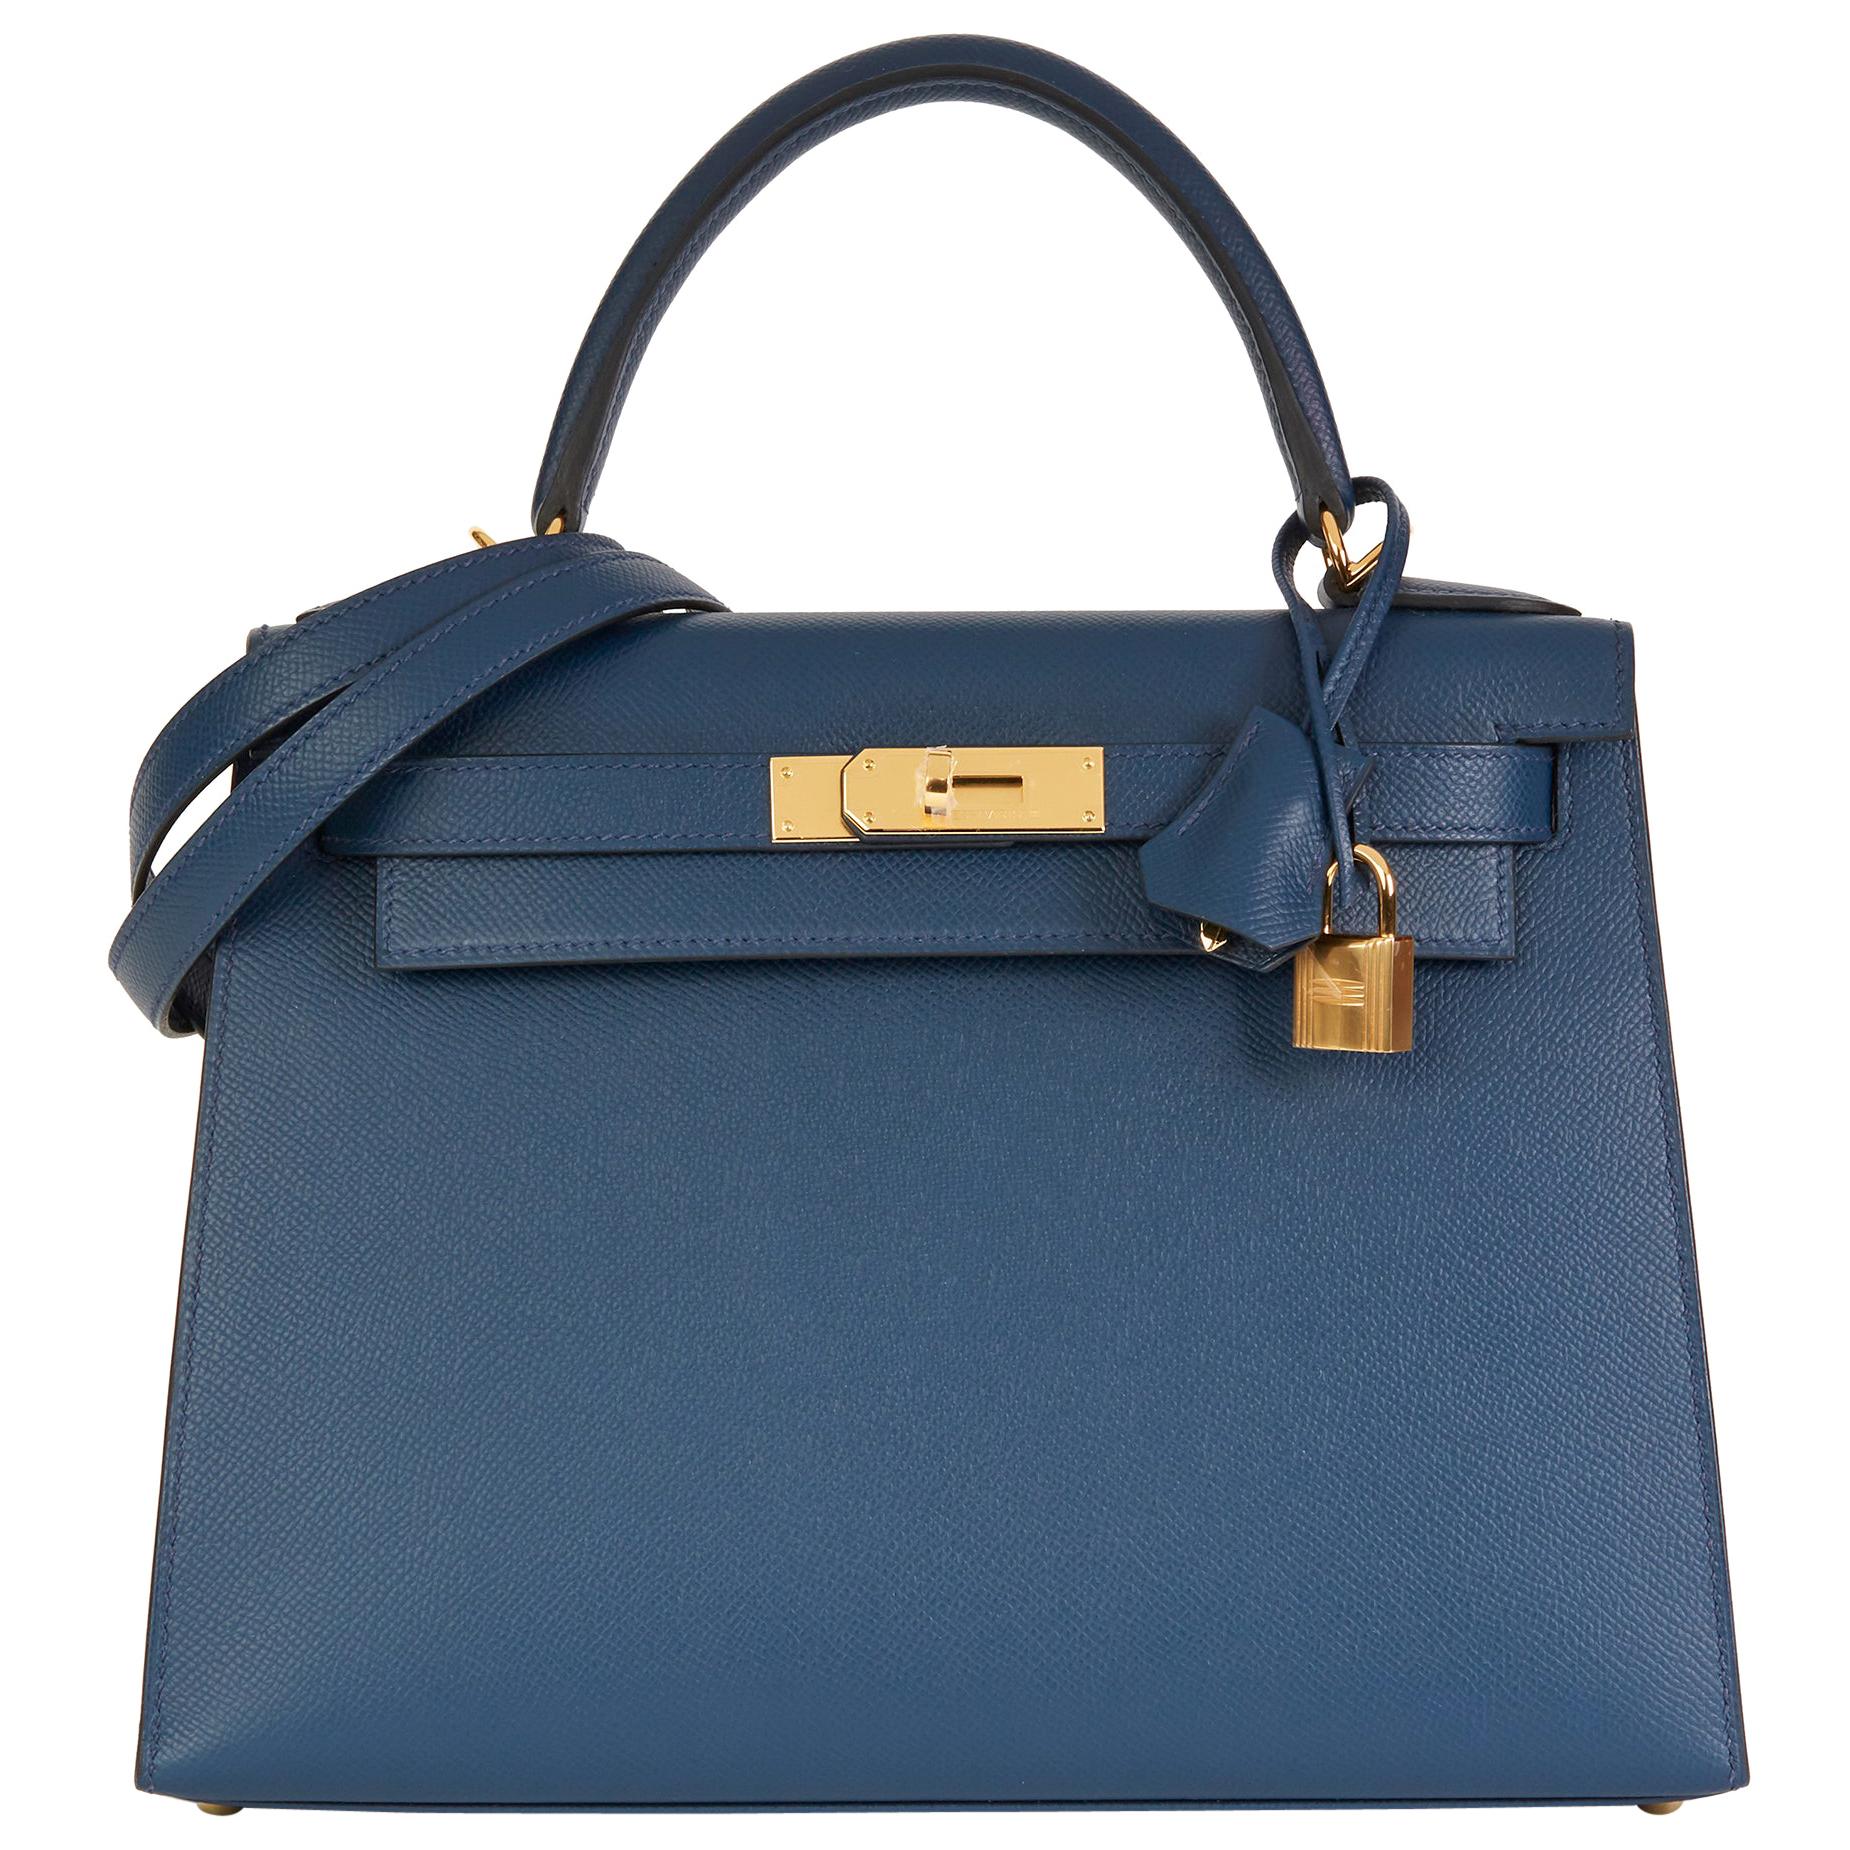 2019 Hermès Bleu de Malte Epsom Leather Kelly 28cm